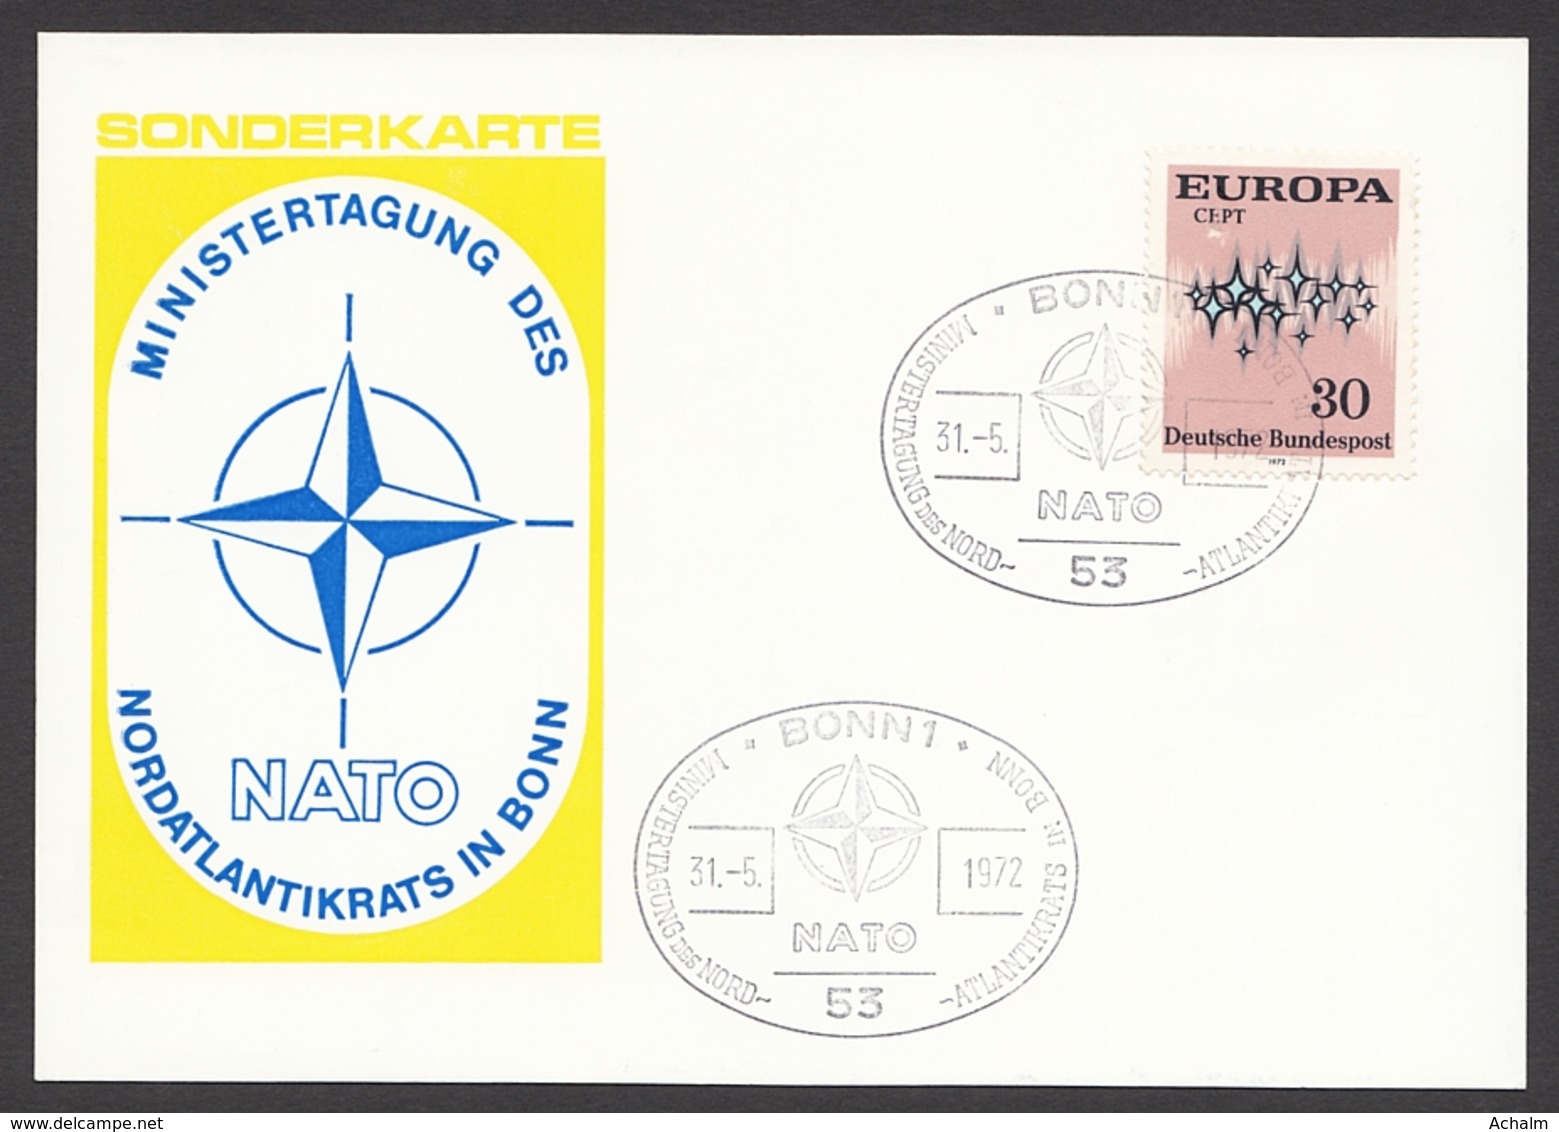 Germany-BRD - Sonderkarte - Ministertagung Der NATO In Bonn - MiNr. 717 - SST 30.05.1972 - Briefe U. Dokumente